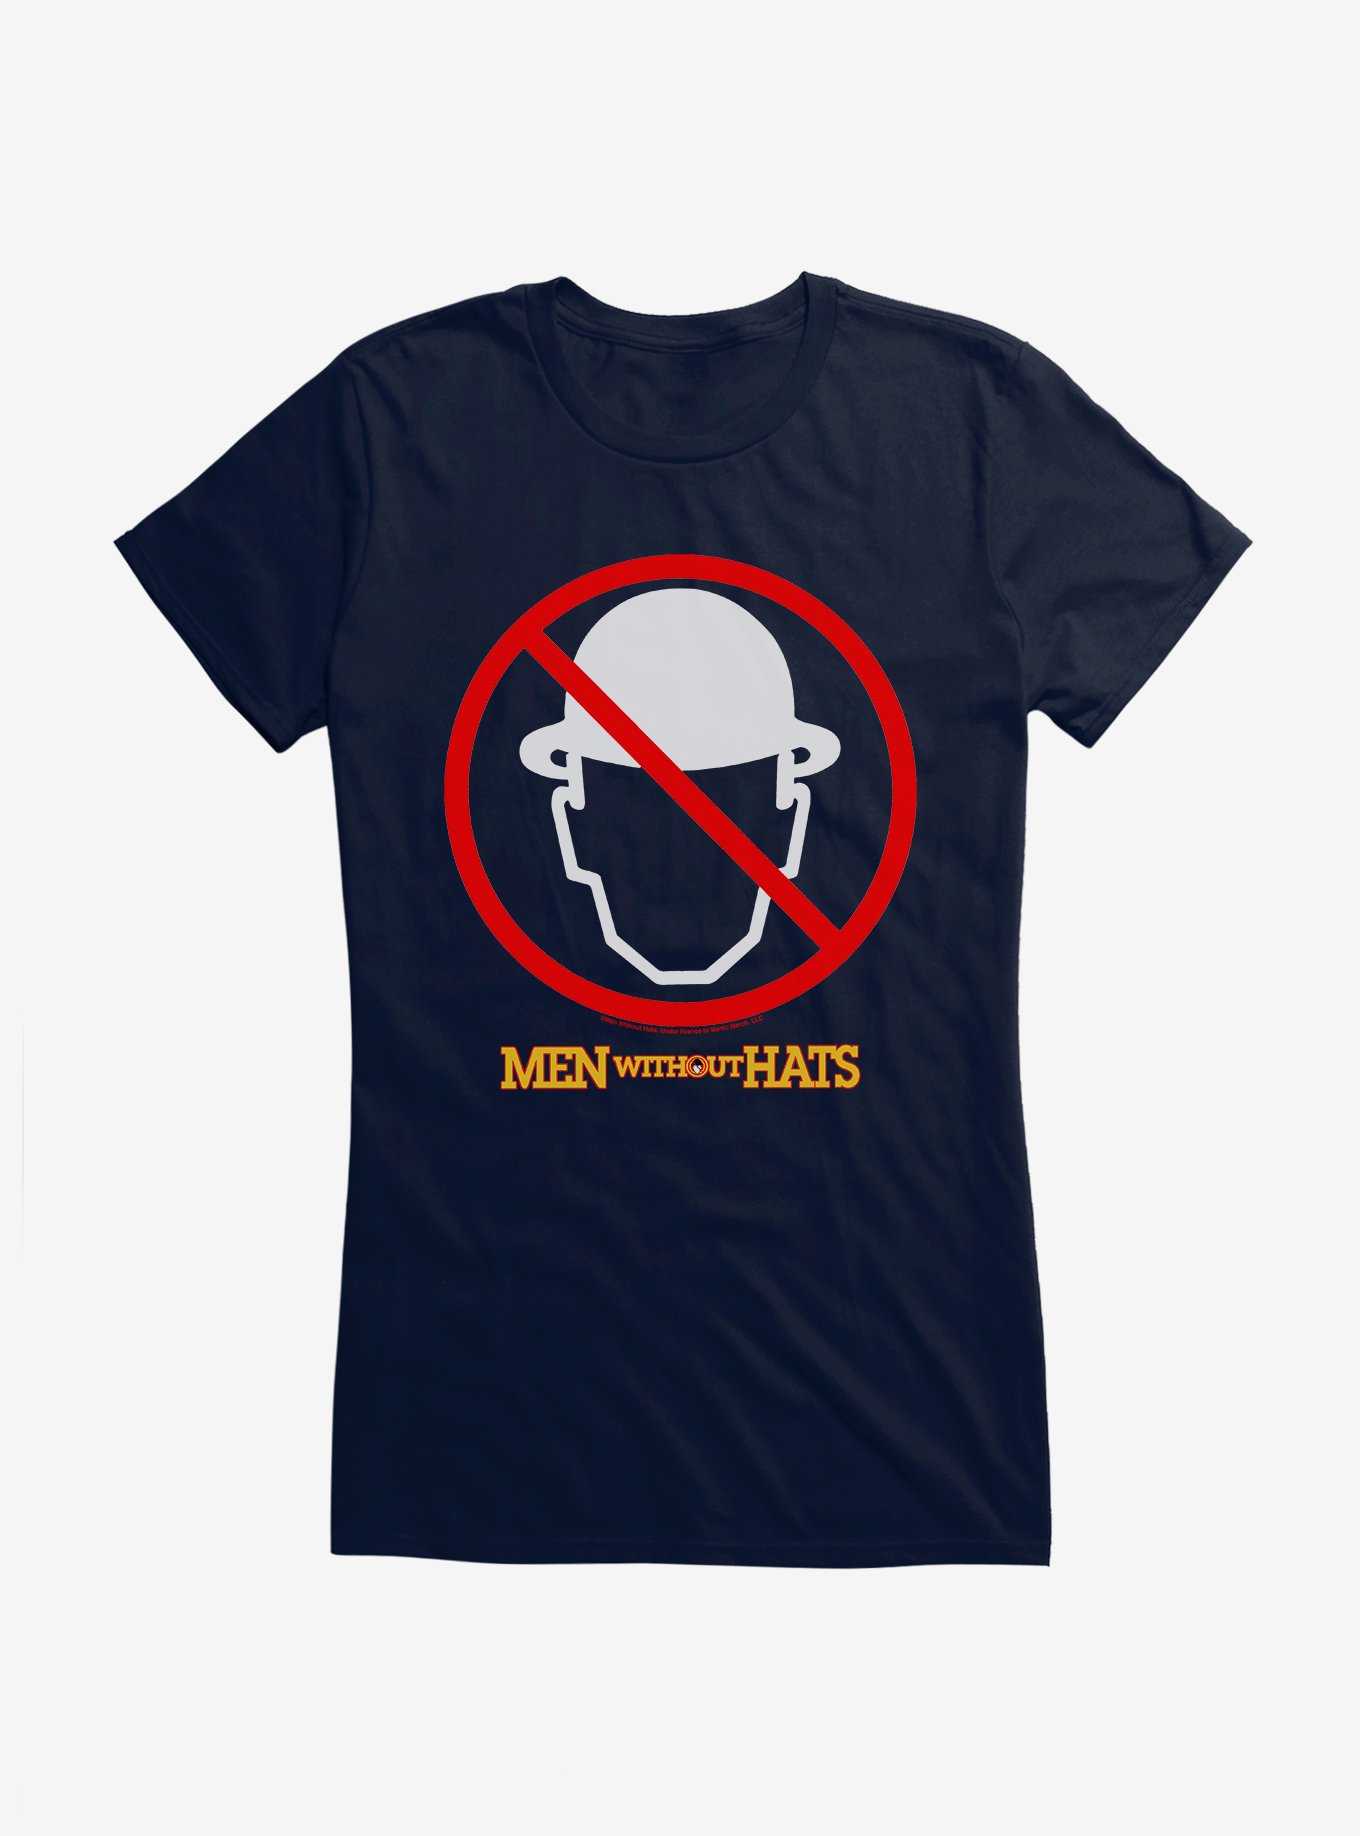 Men Without Hats Band Logo Girls T-Shirt, , hi-res